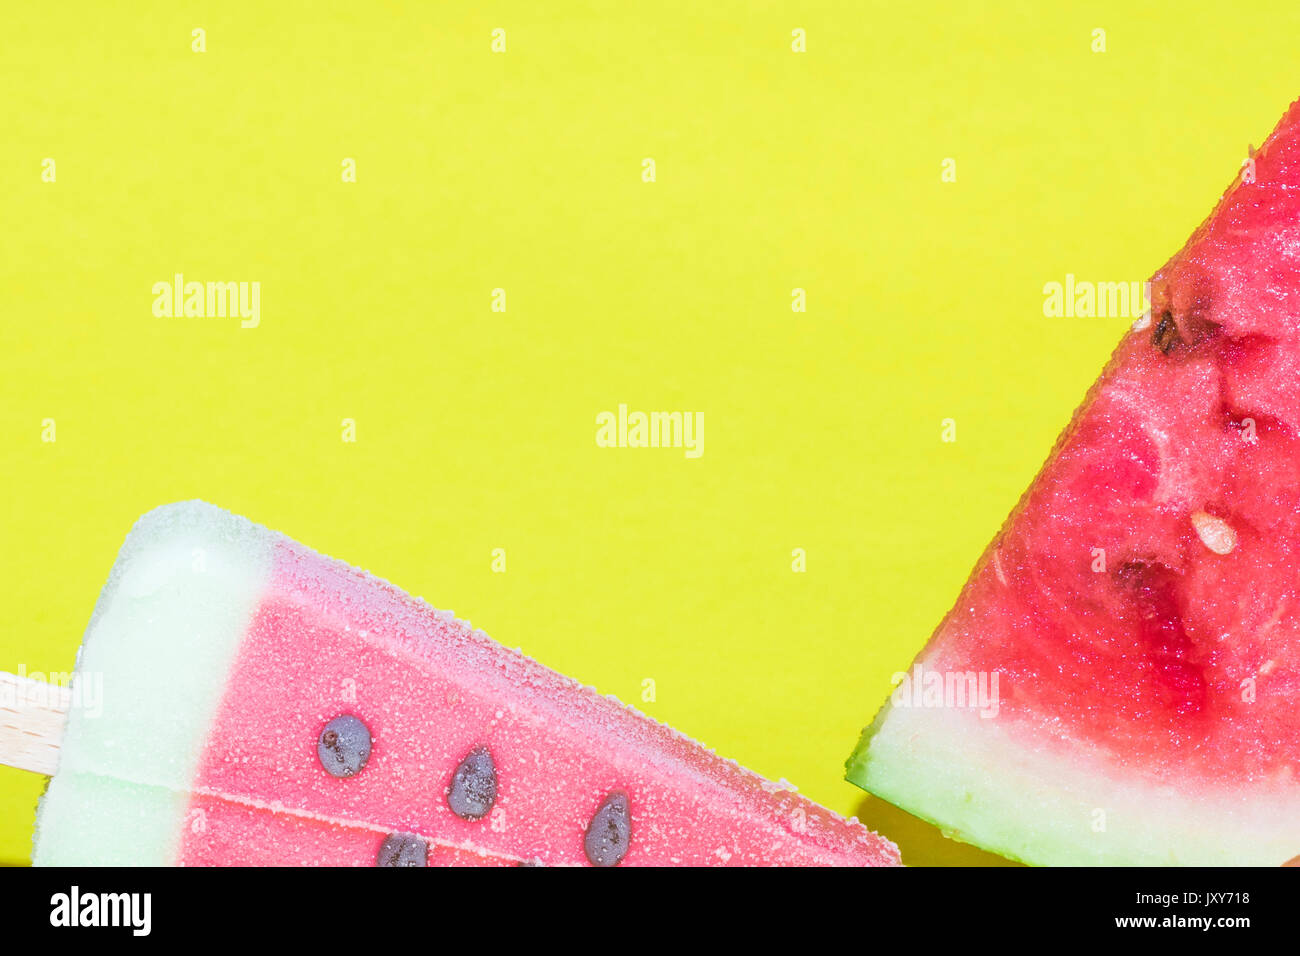 Watermelon slice and ice cream on yellow background Stock Photo